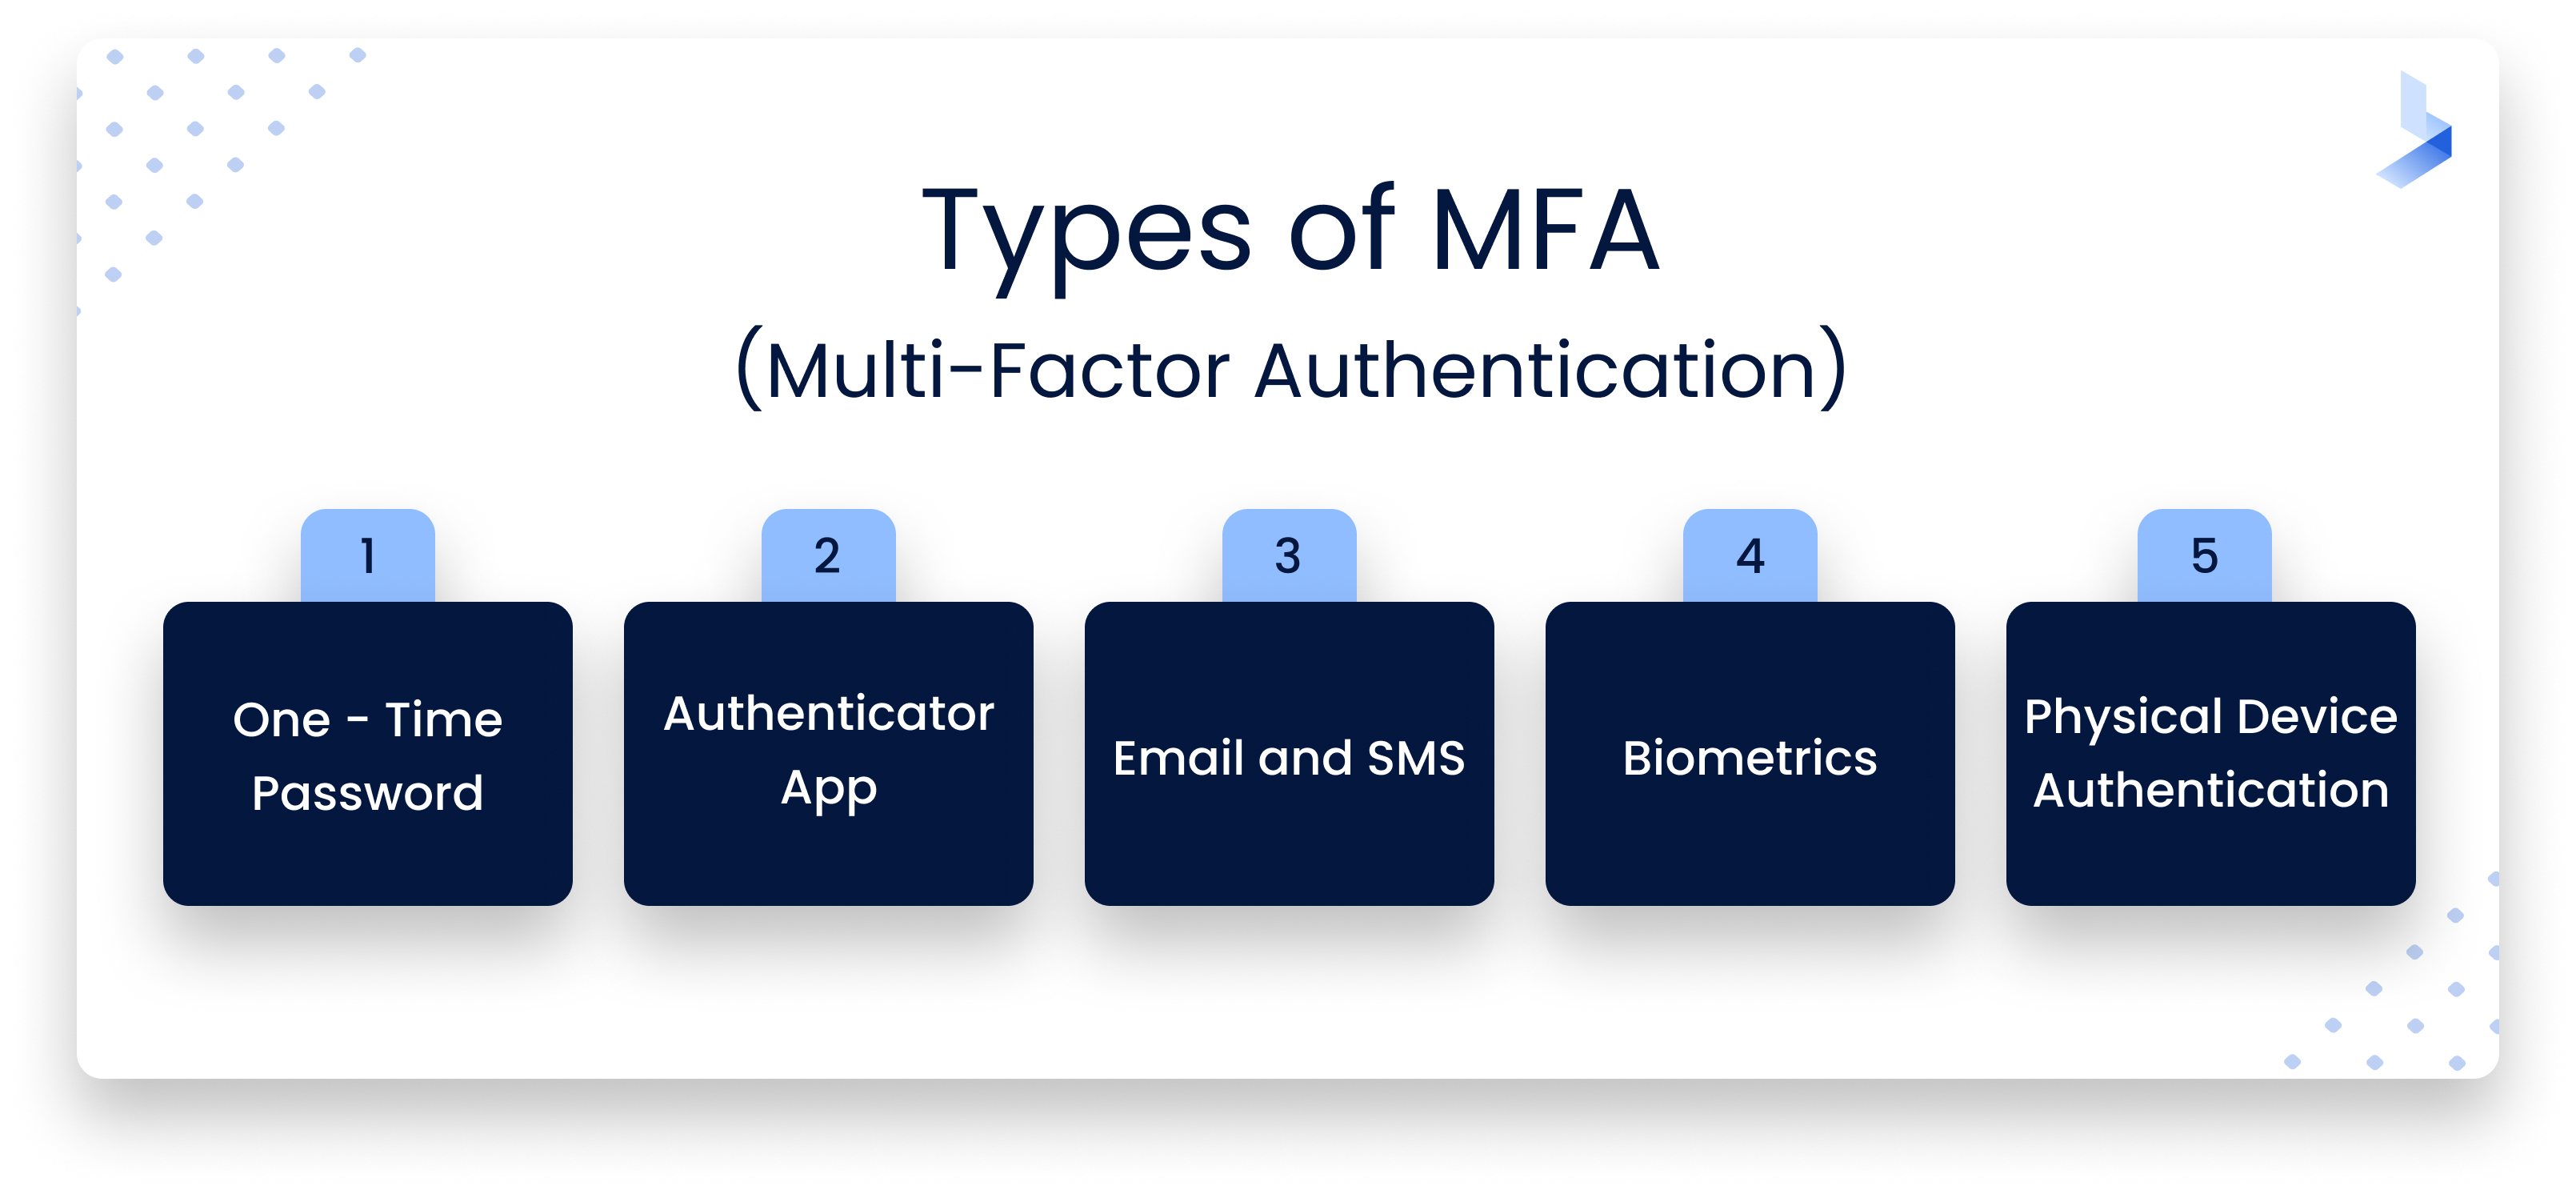 Types of MFA